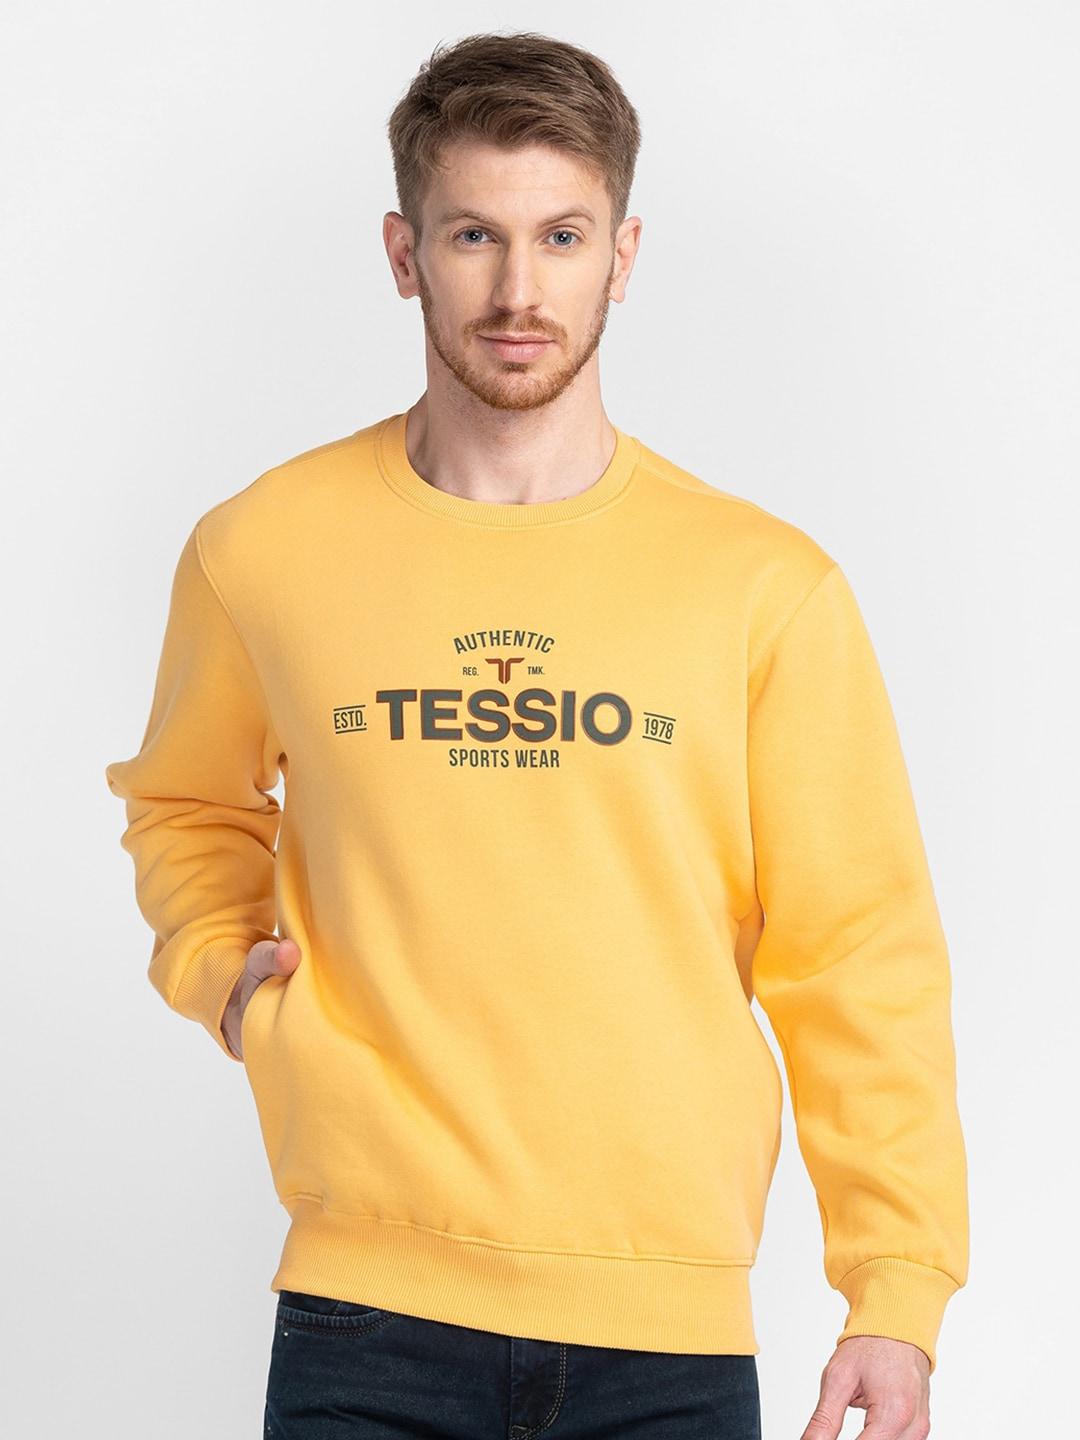 tessio-men-yellow-printed-sweatshirt